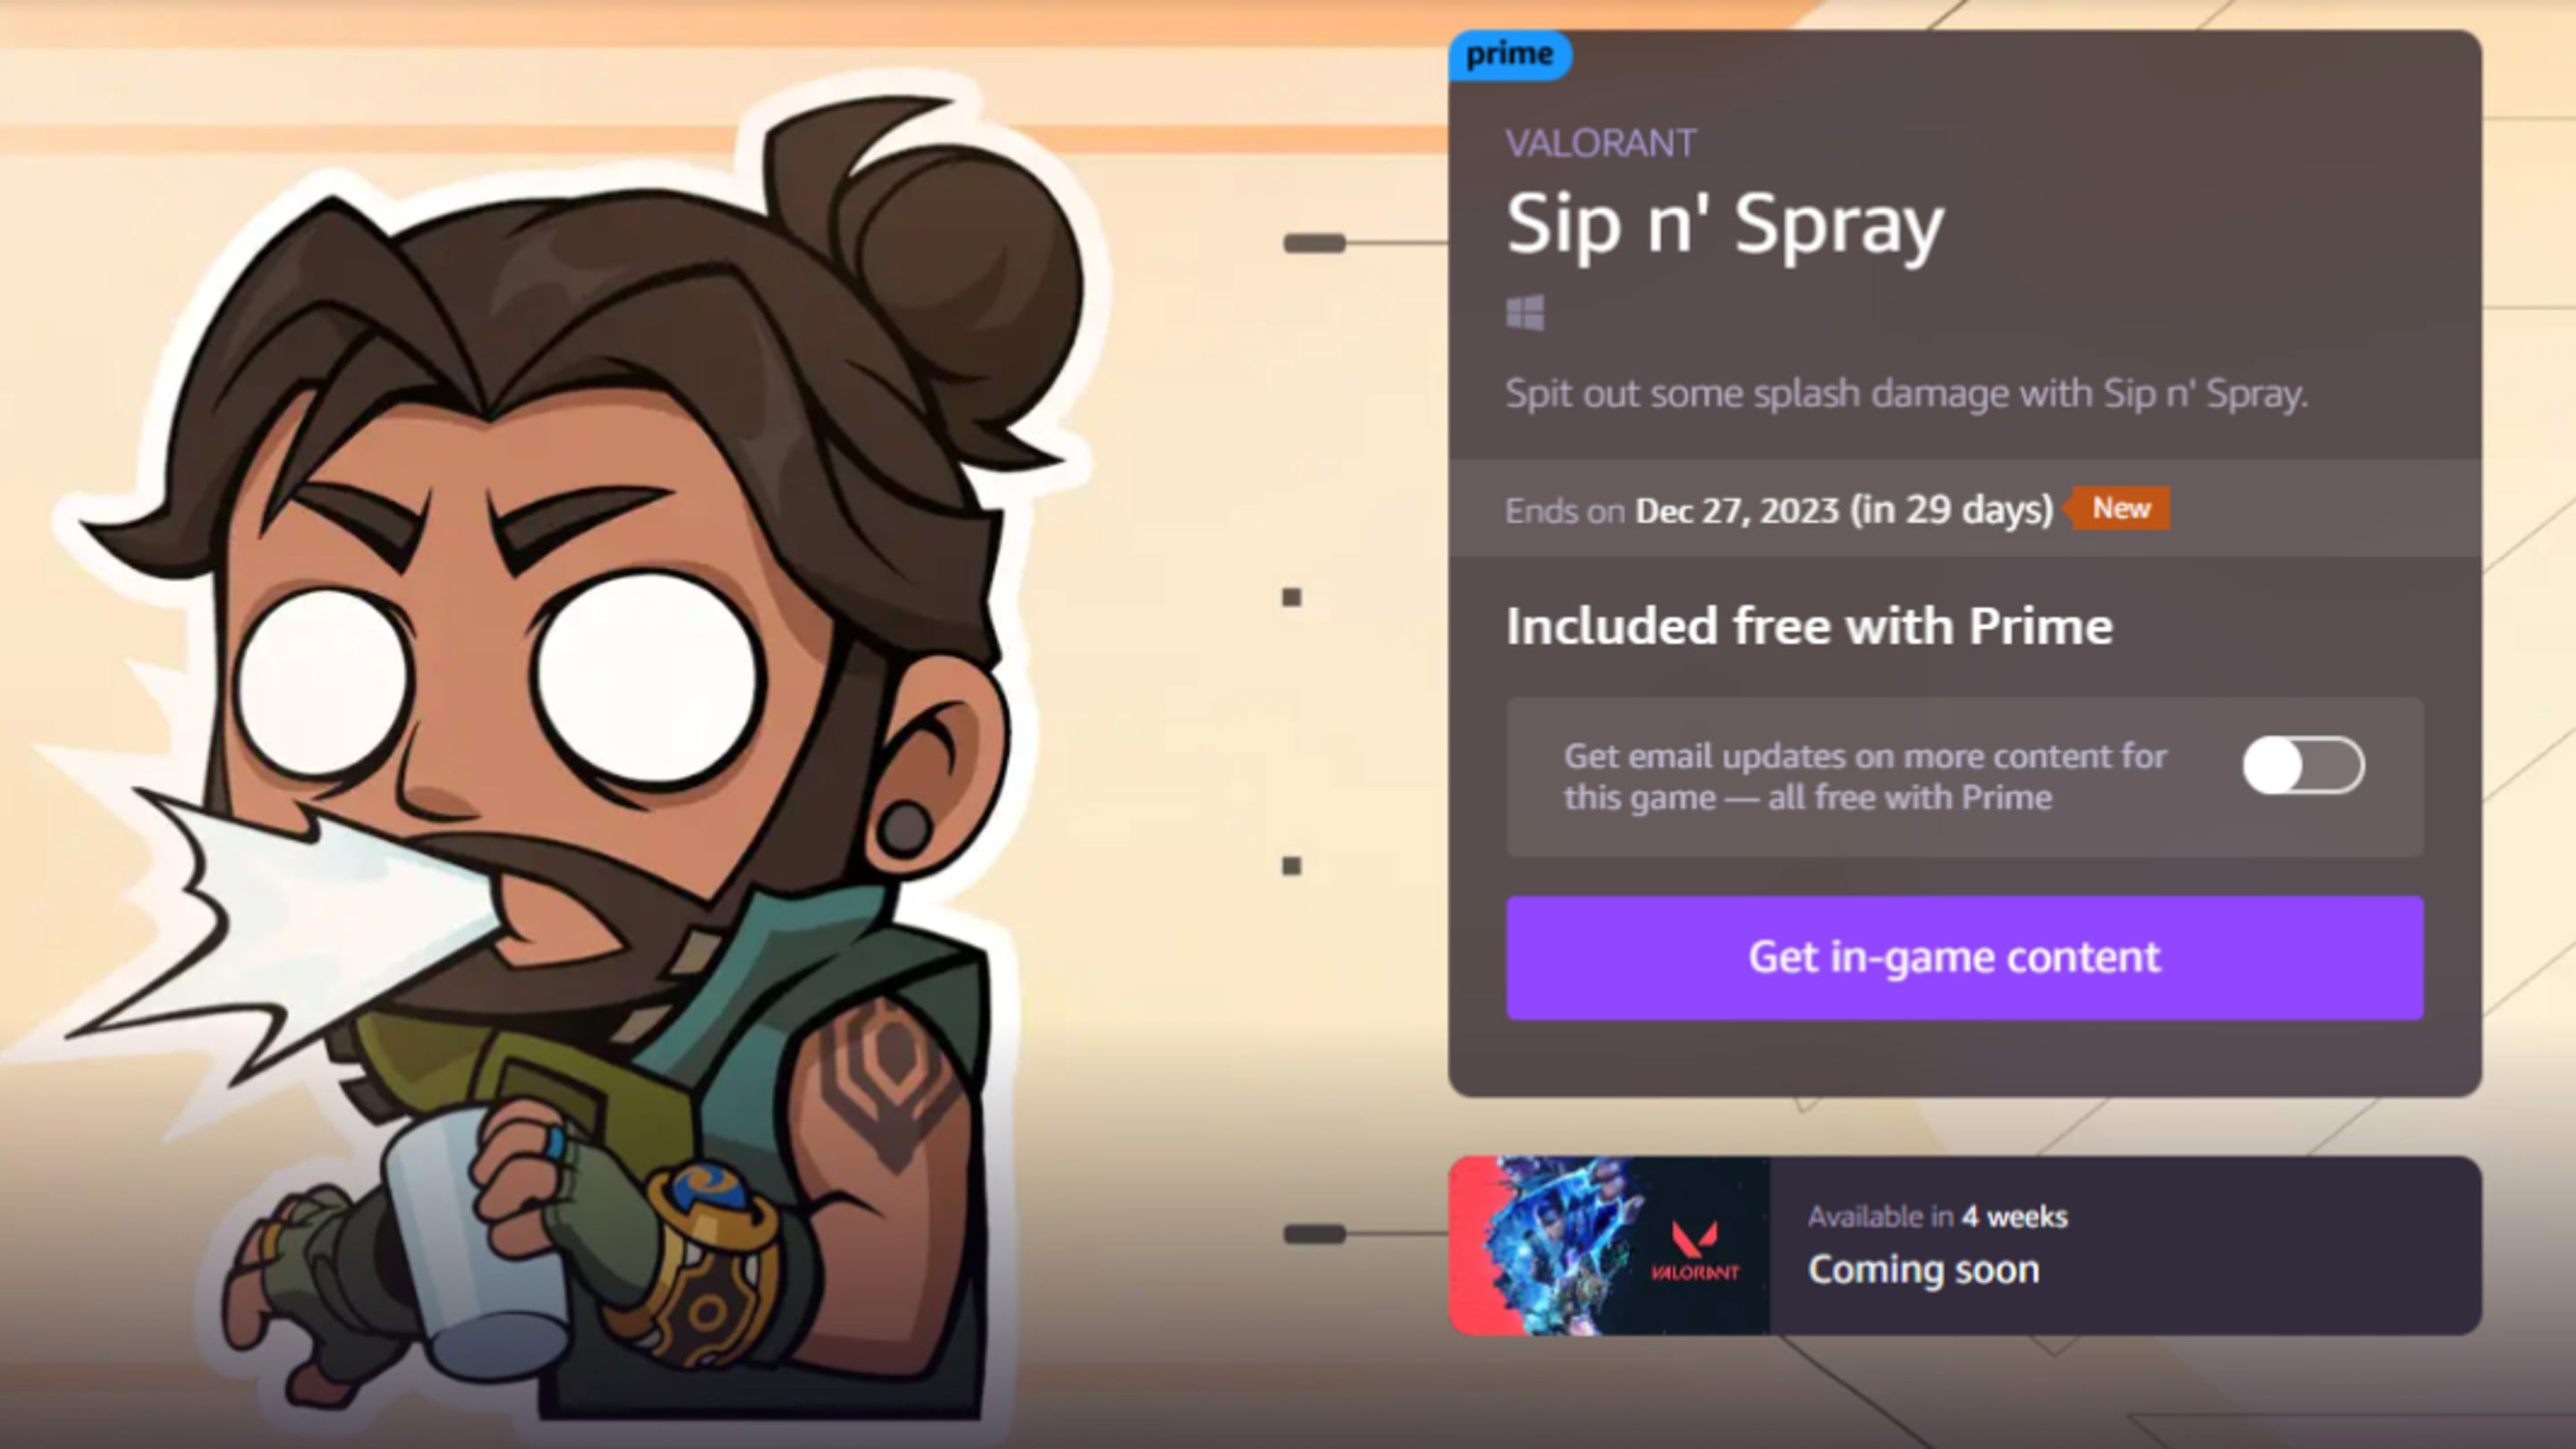 VALORANT Prime Gaming Rewards: Sip n' Spray (December 2023)